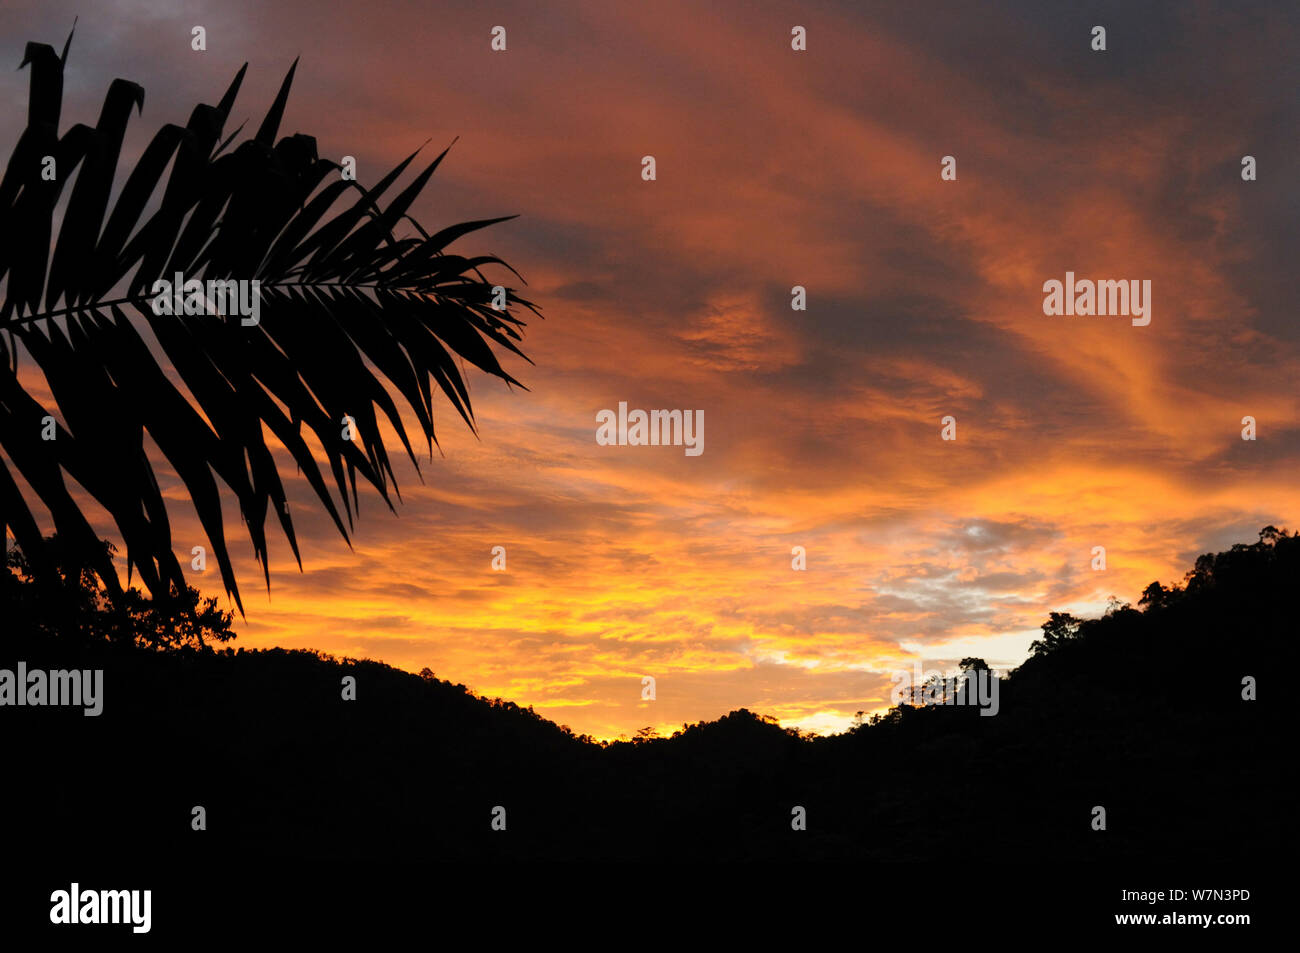 Sonnenuntergang in der Cloud Forest, mit silhoutte von Palm verlassen (Attalea sp.), Jama Coaque Ecological Reserve, Provinz Manabi, Ecuador. Februar 2012. Stockfoto